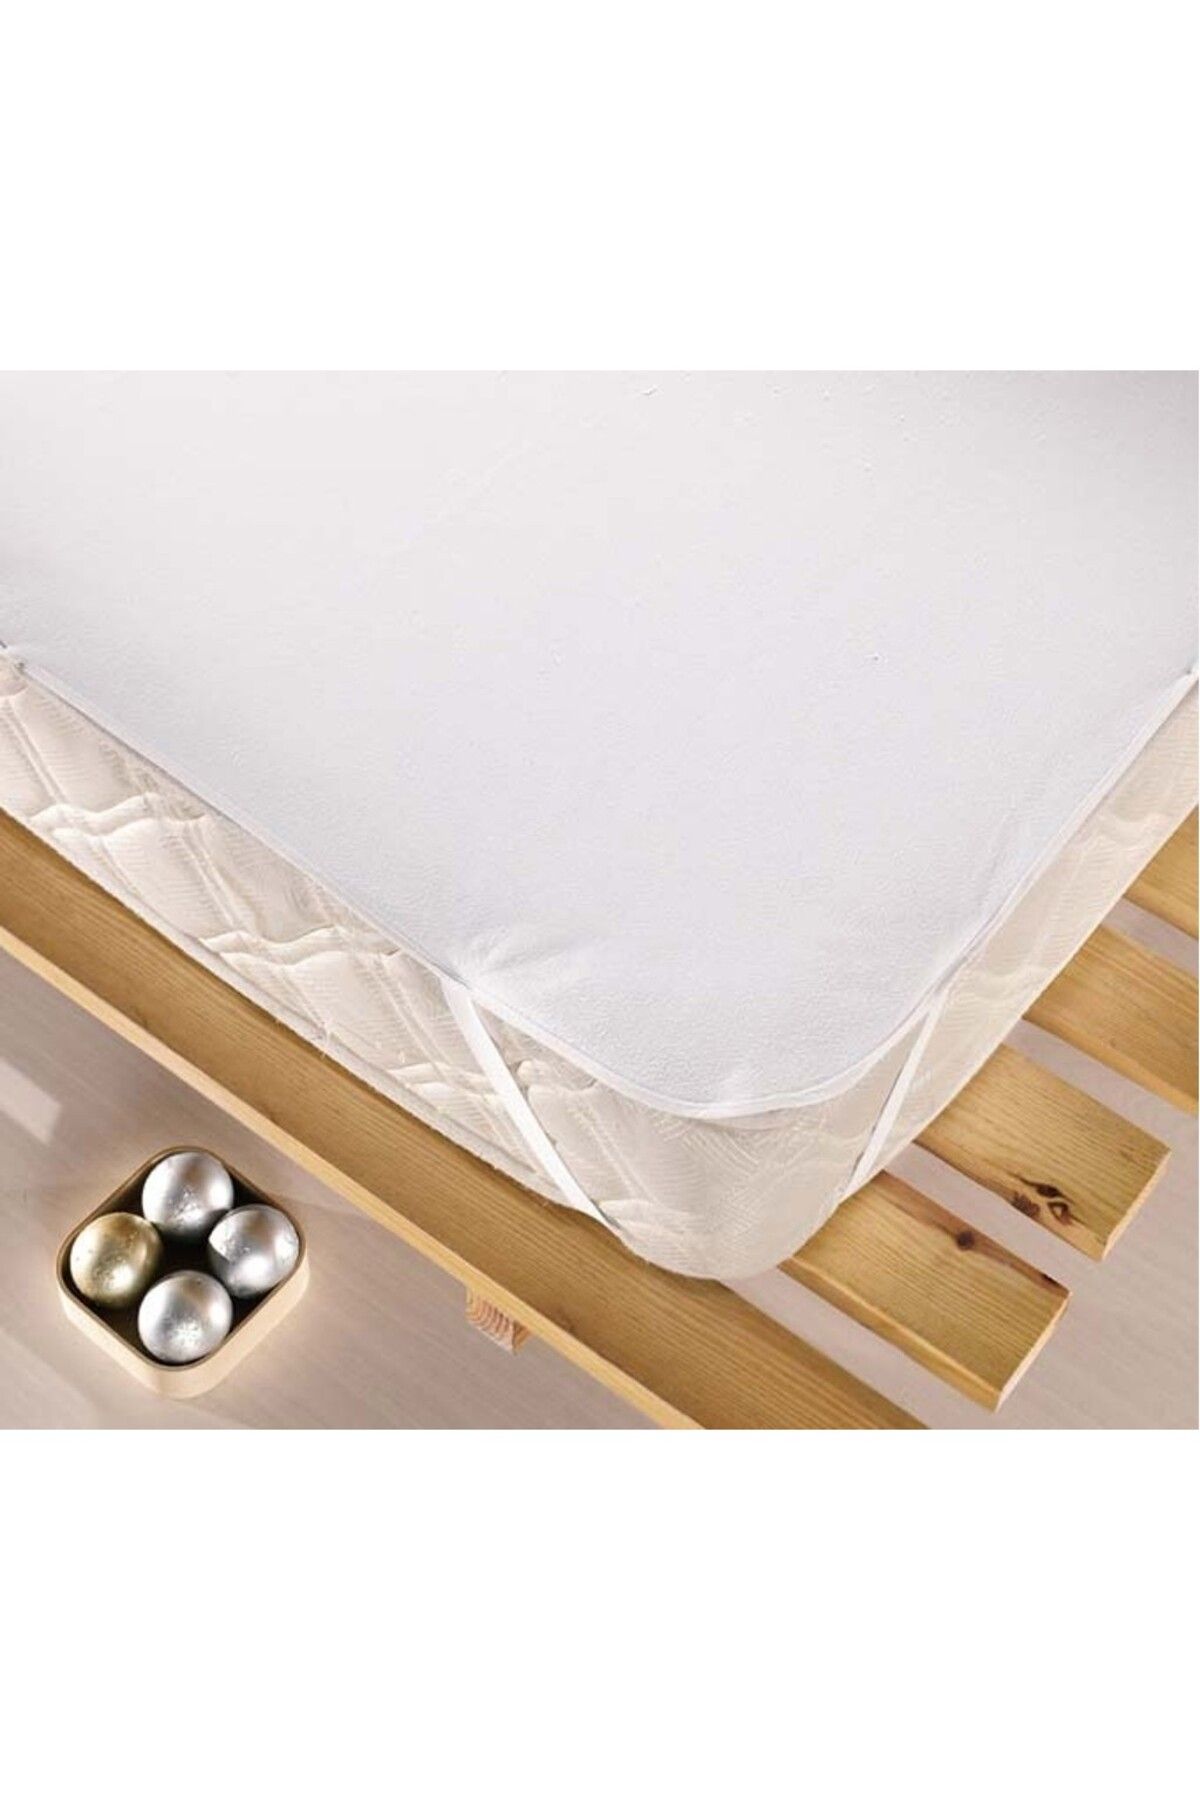 Komfort Home 60x120 Pamuklu Sıvı Geçirmez Lastikli Bebek Yatak Alezi